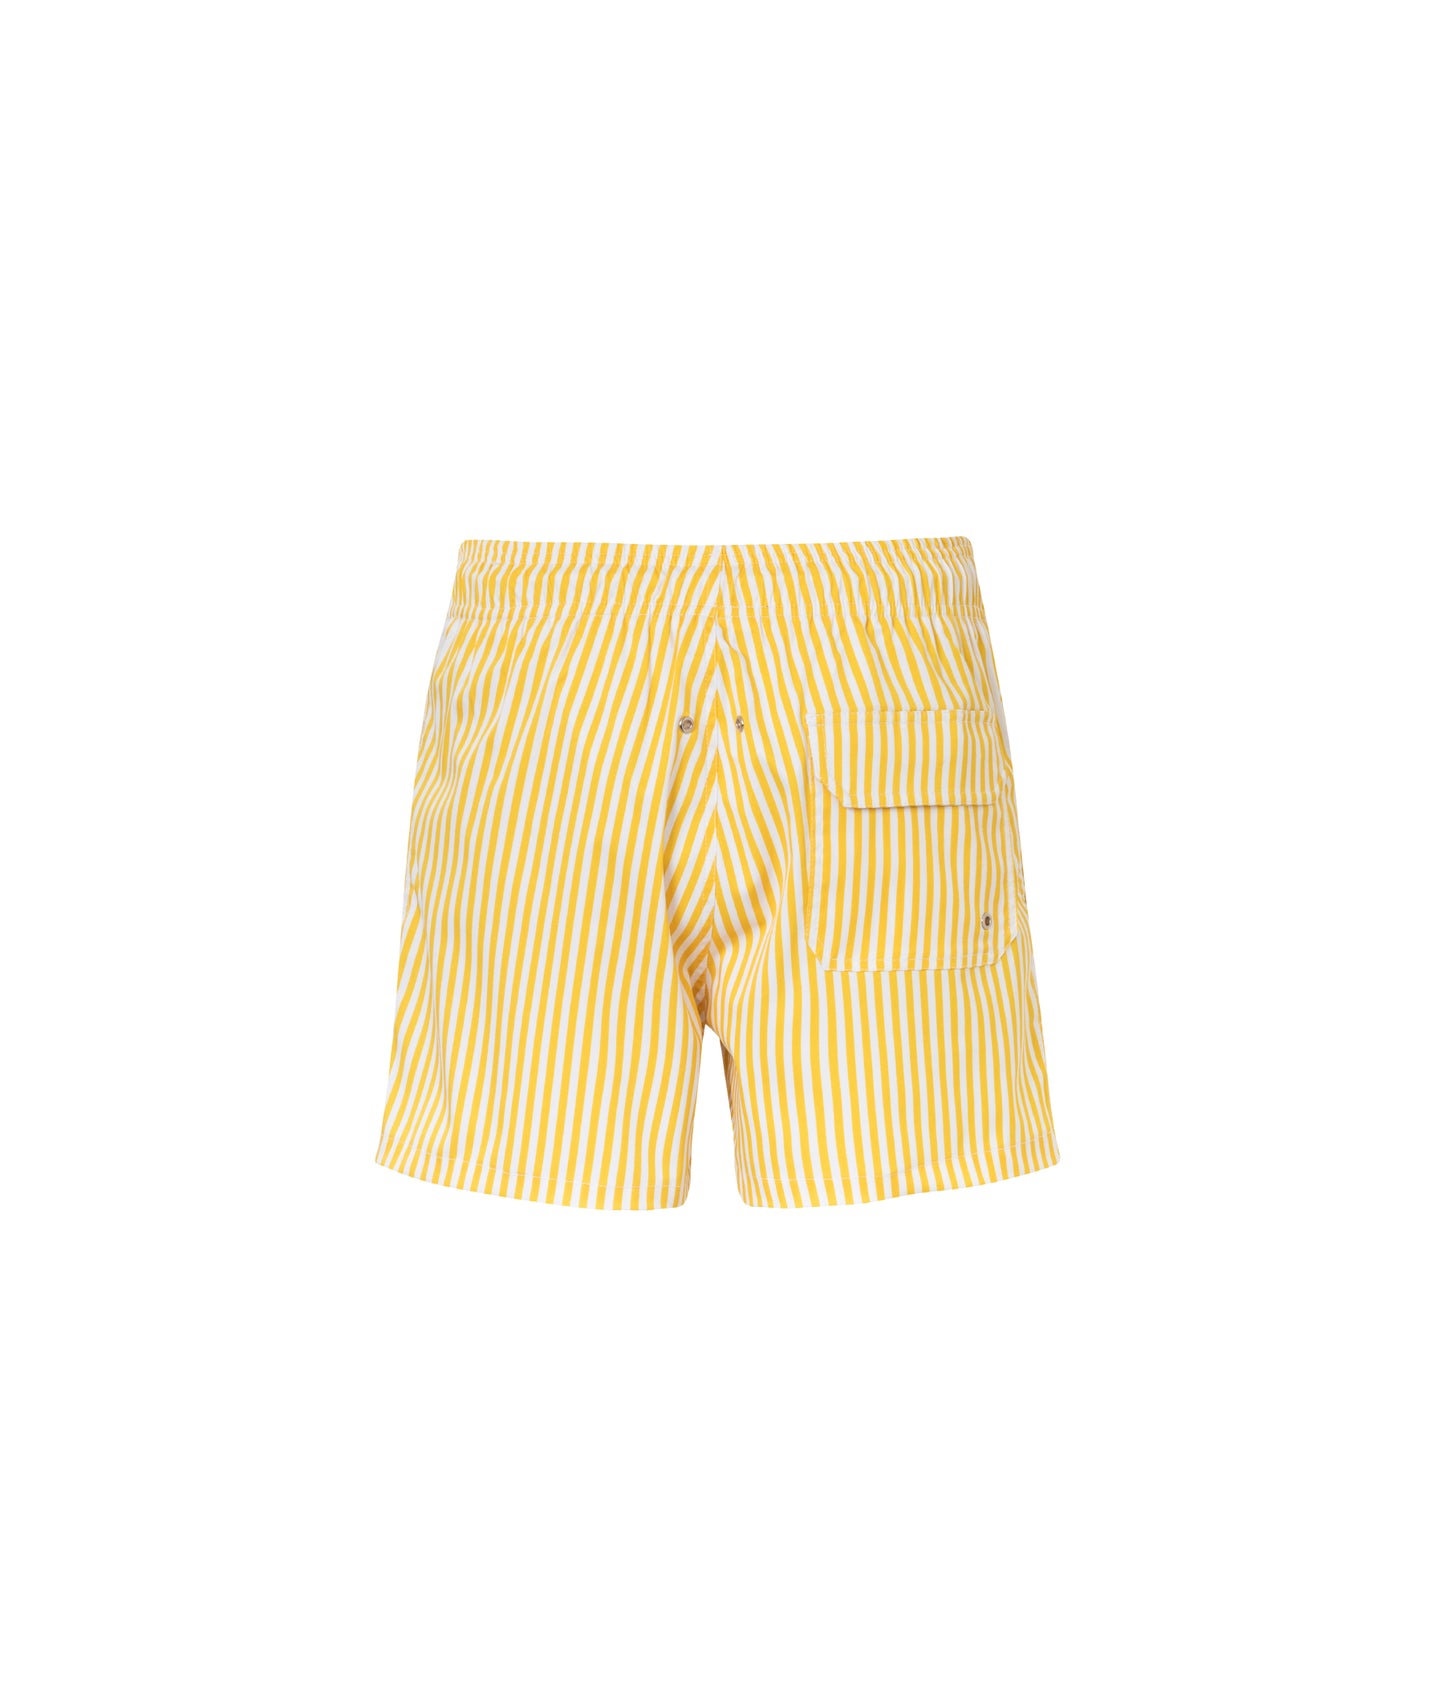 Verdelimon - Swim Trunk - Limones Loulou - Yellow Stripes Loulou - Back